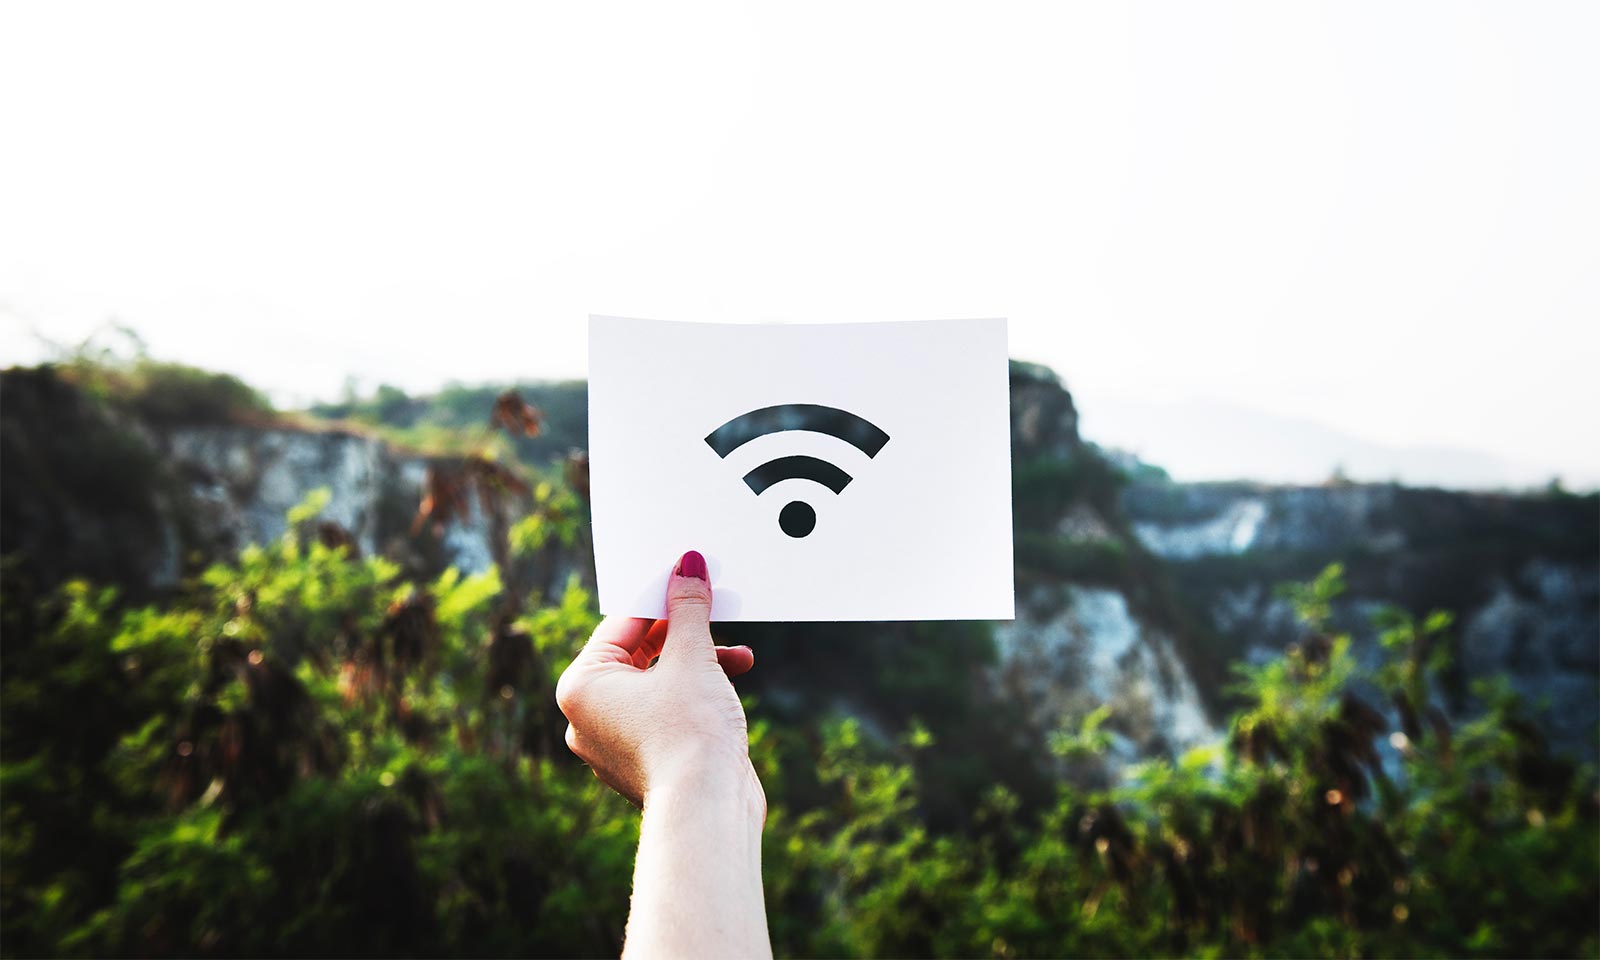 Is internet connectivity still a luxury?